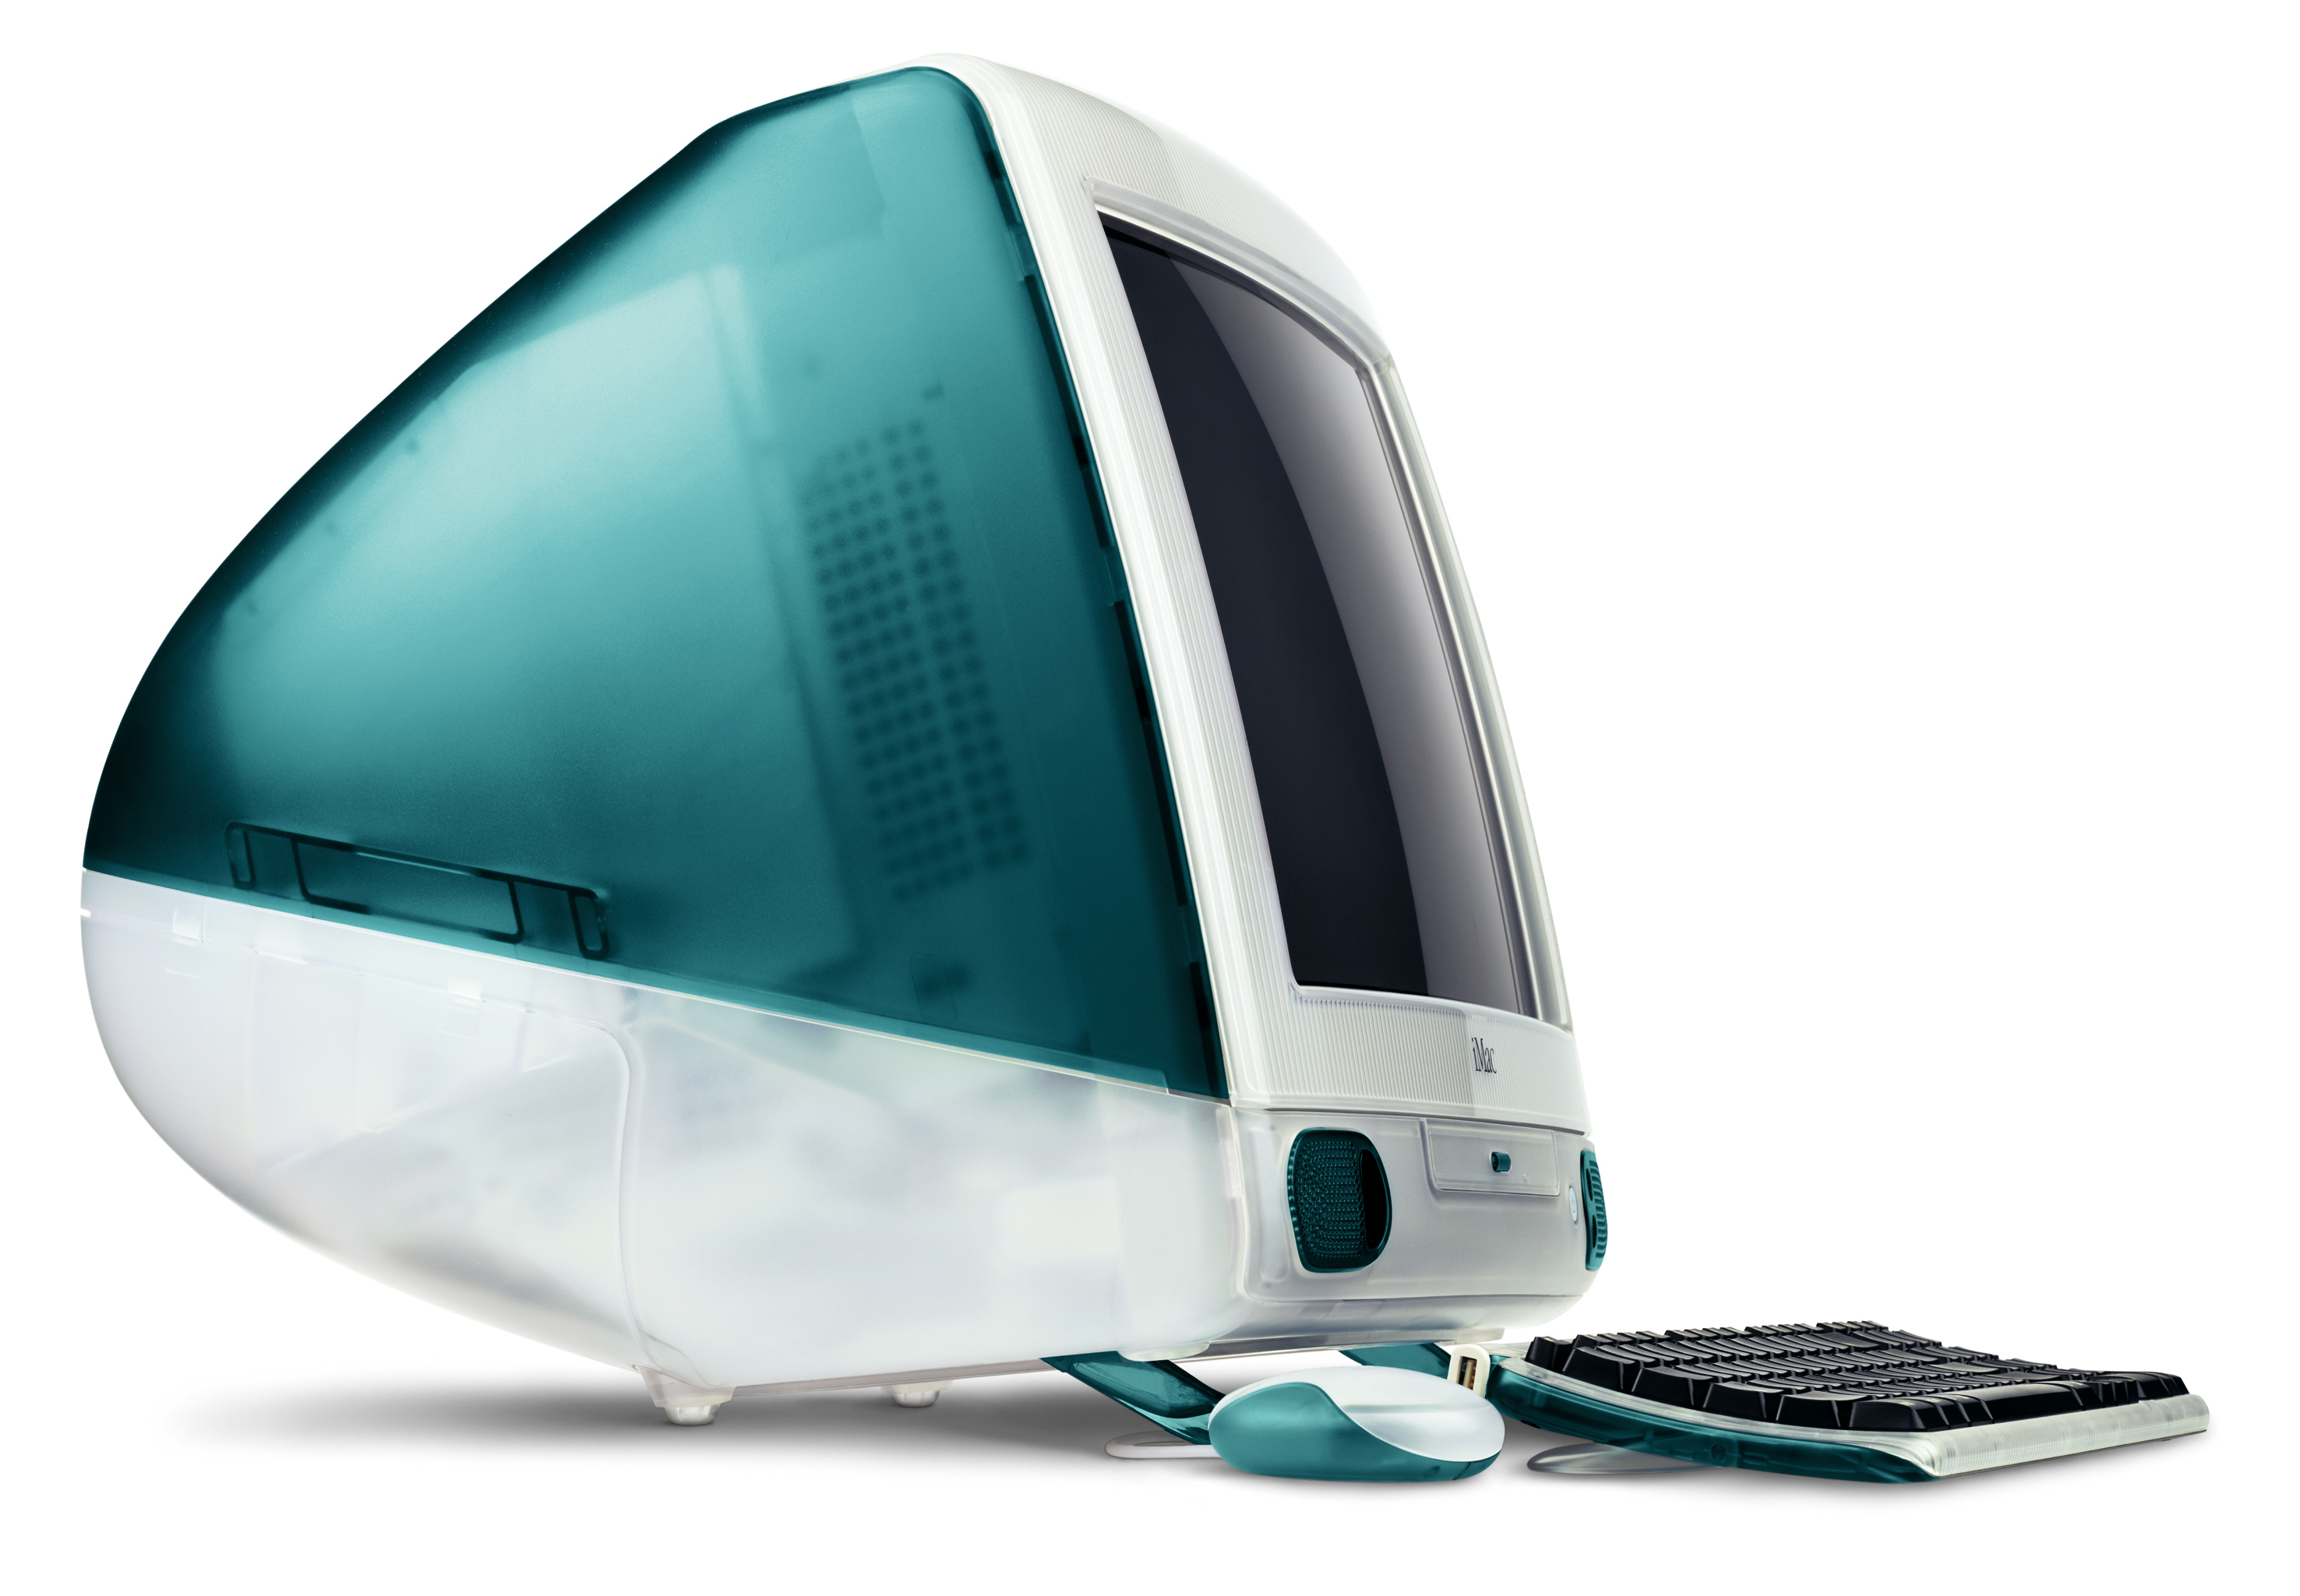 iMac G3 Memory